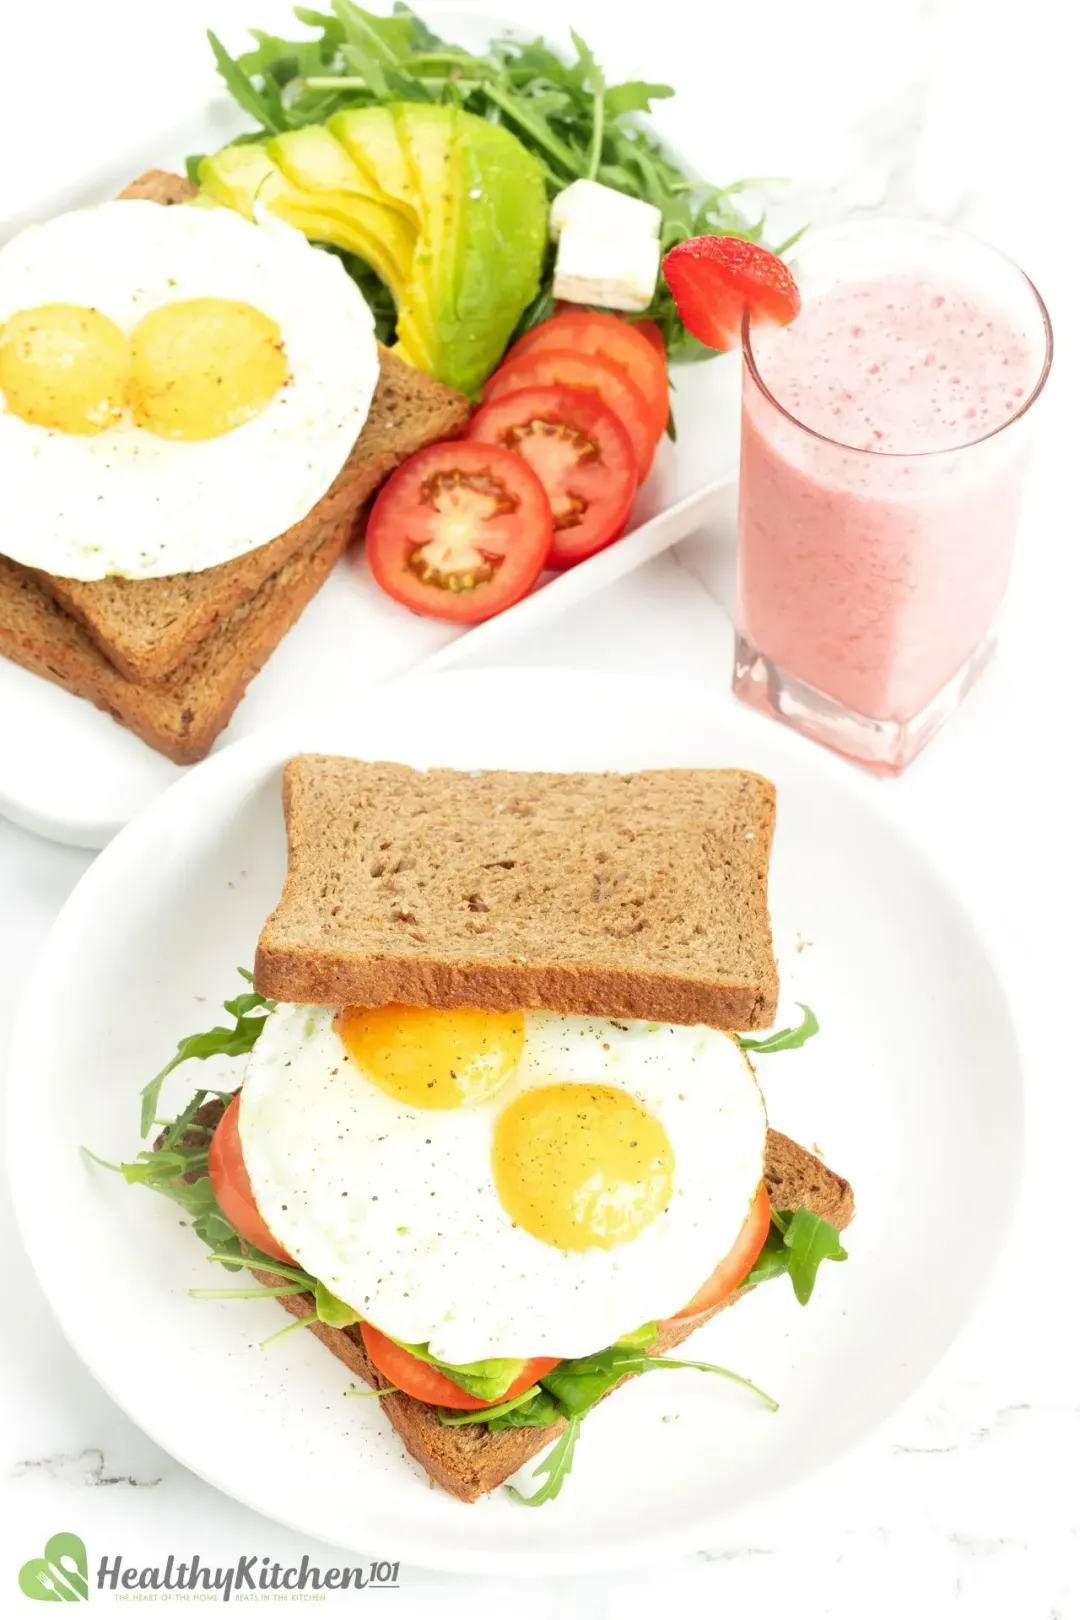 https://cdn.healthyrecipes101.com/recipes/images/eggs/what-do-you-eat-sunny-side-up-eggs-with-claurlkbi00h8df1bdzokaf6k.webp?w=1080&q=80